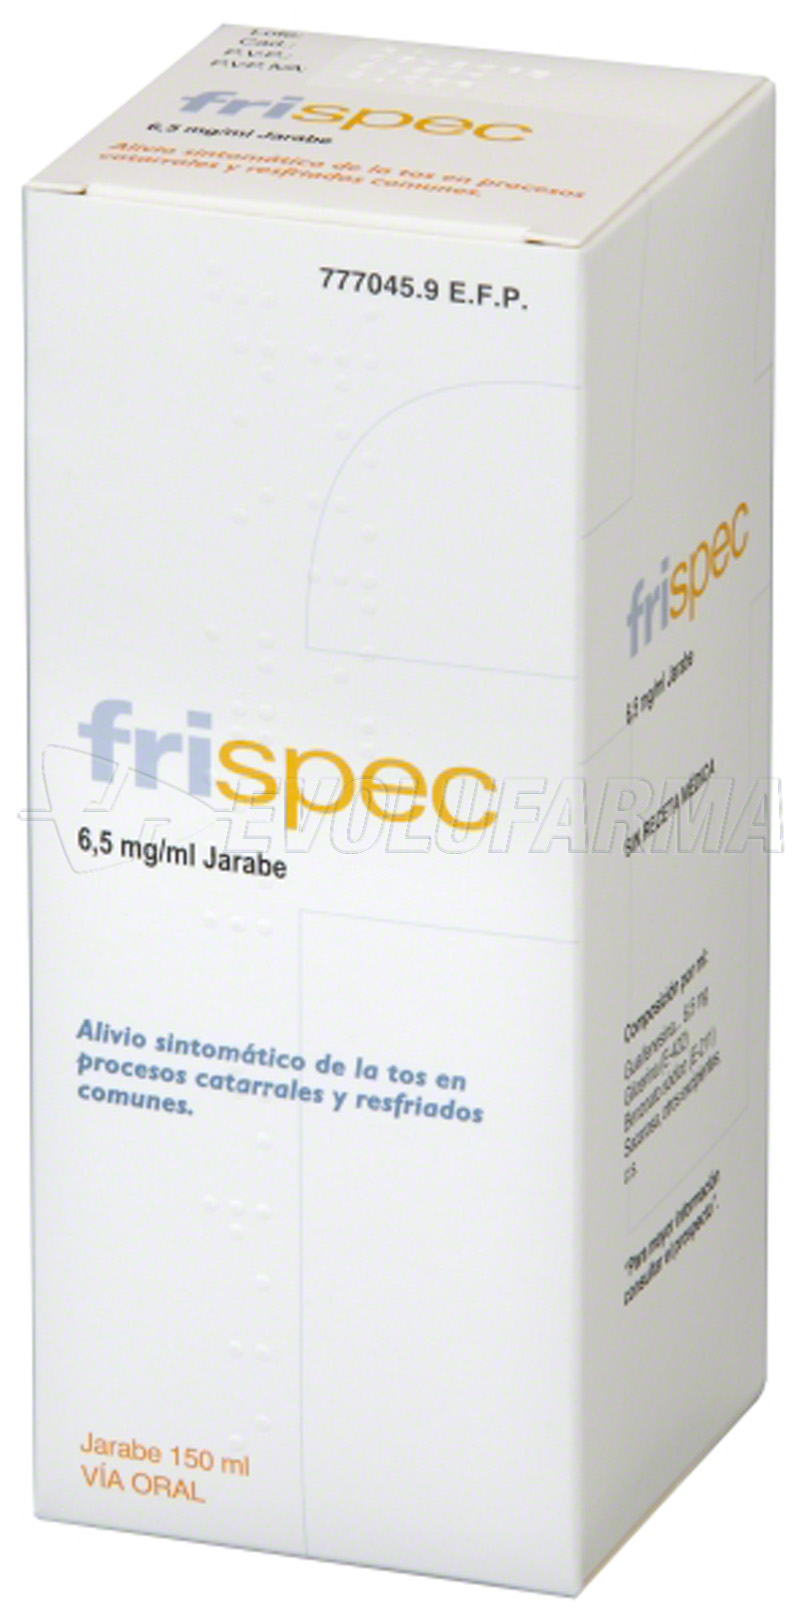 FRISPEC 6,5 mg/ml JARABE, 1 frasco de 150 ml